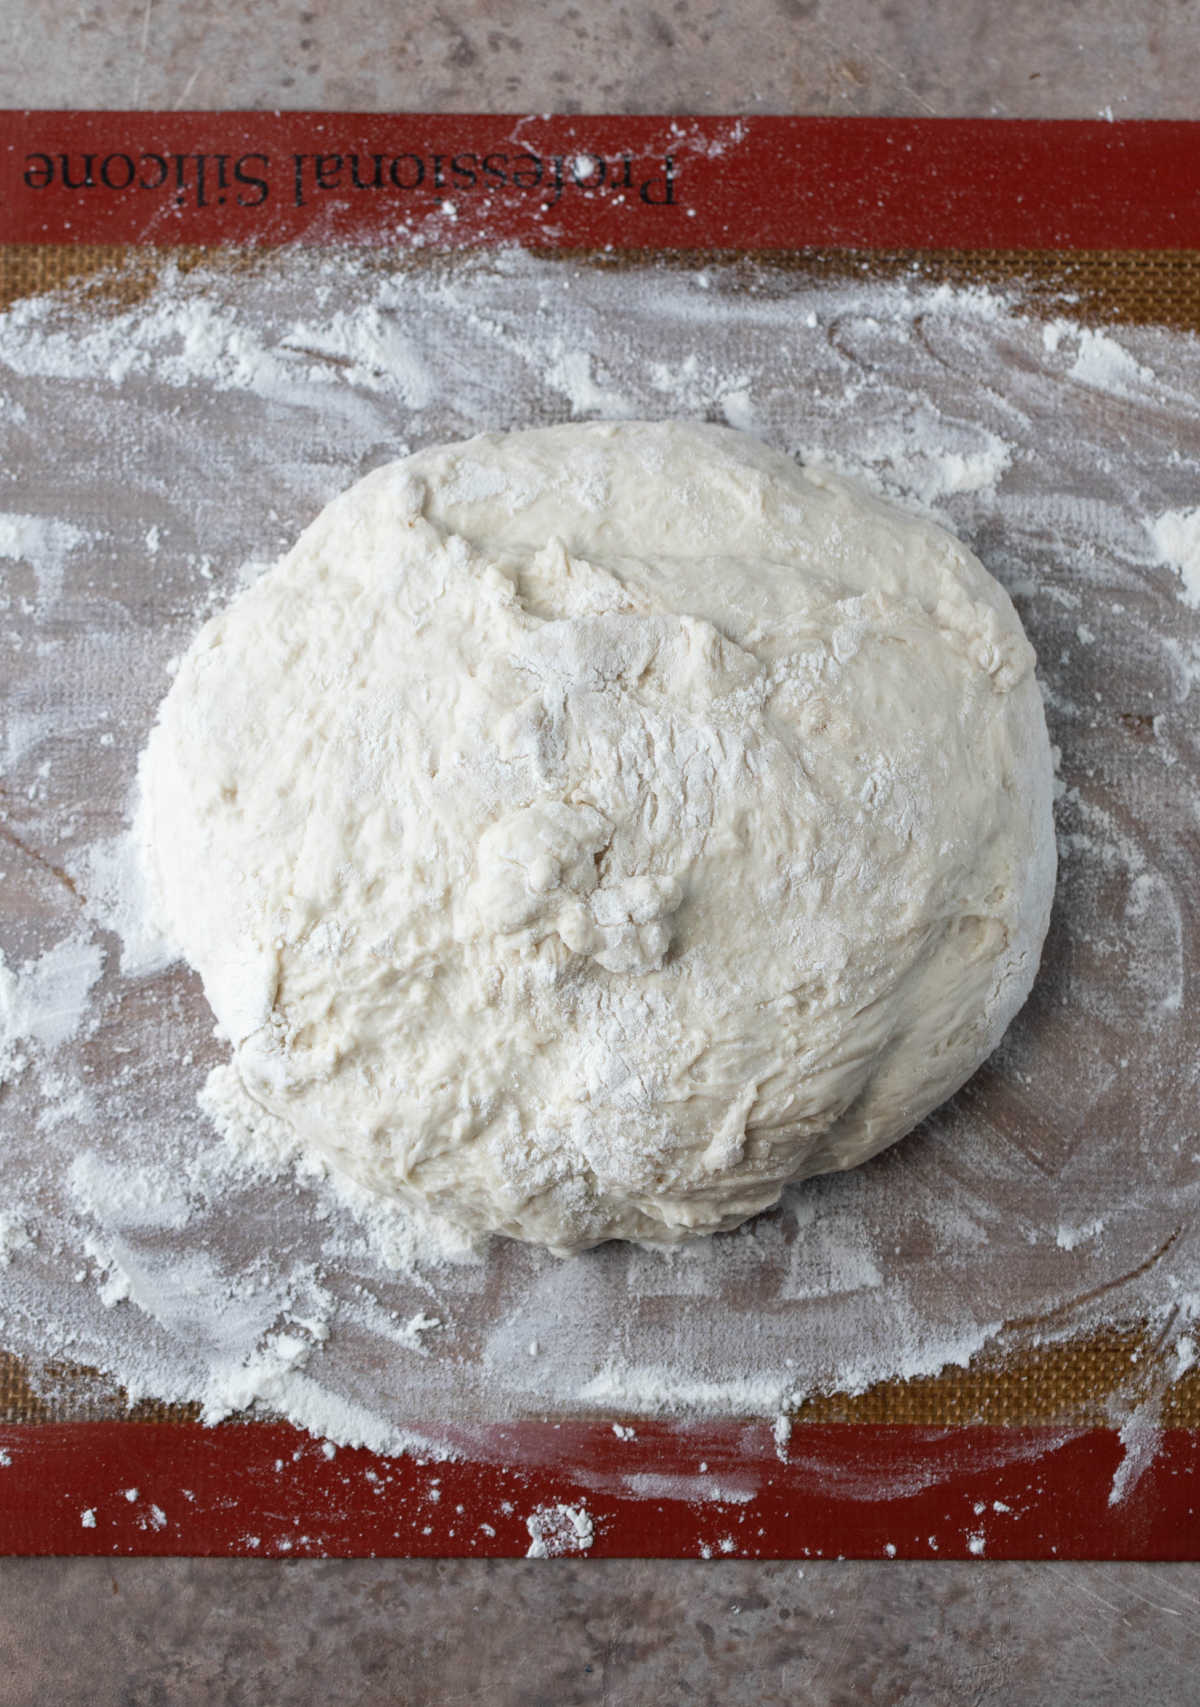 No knead bread dough in a ball on a floured surface. 